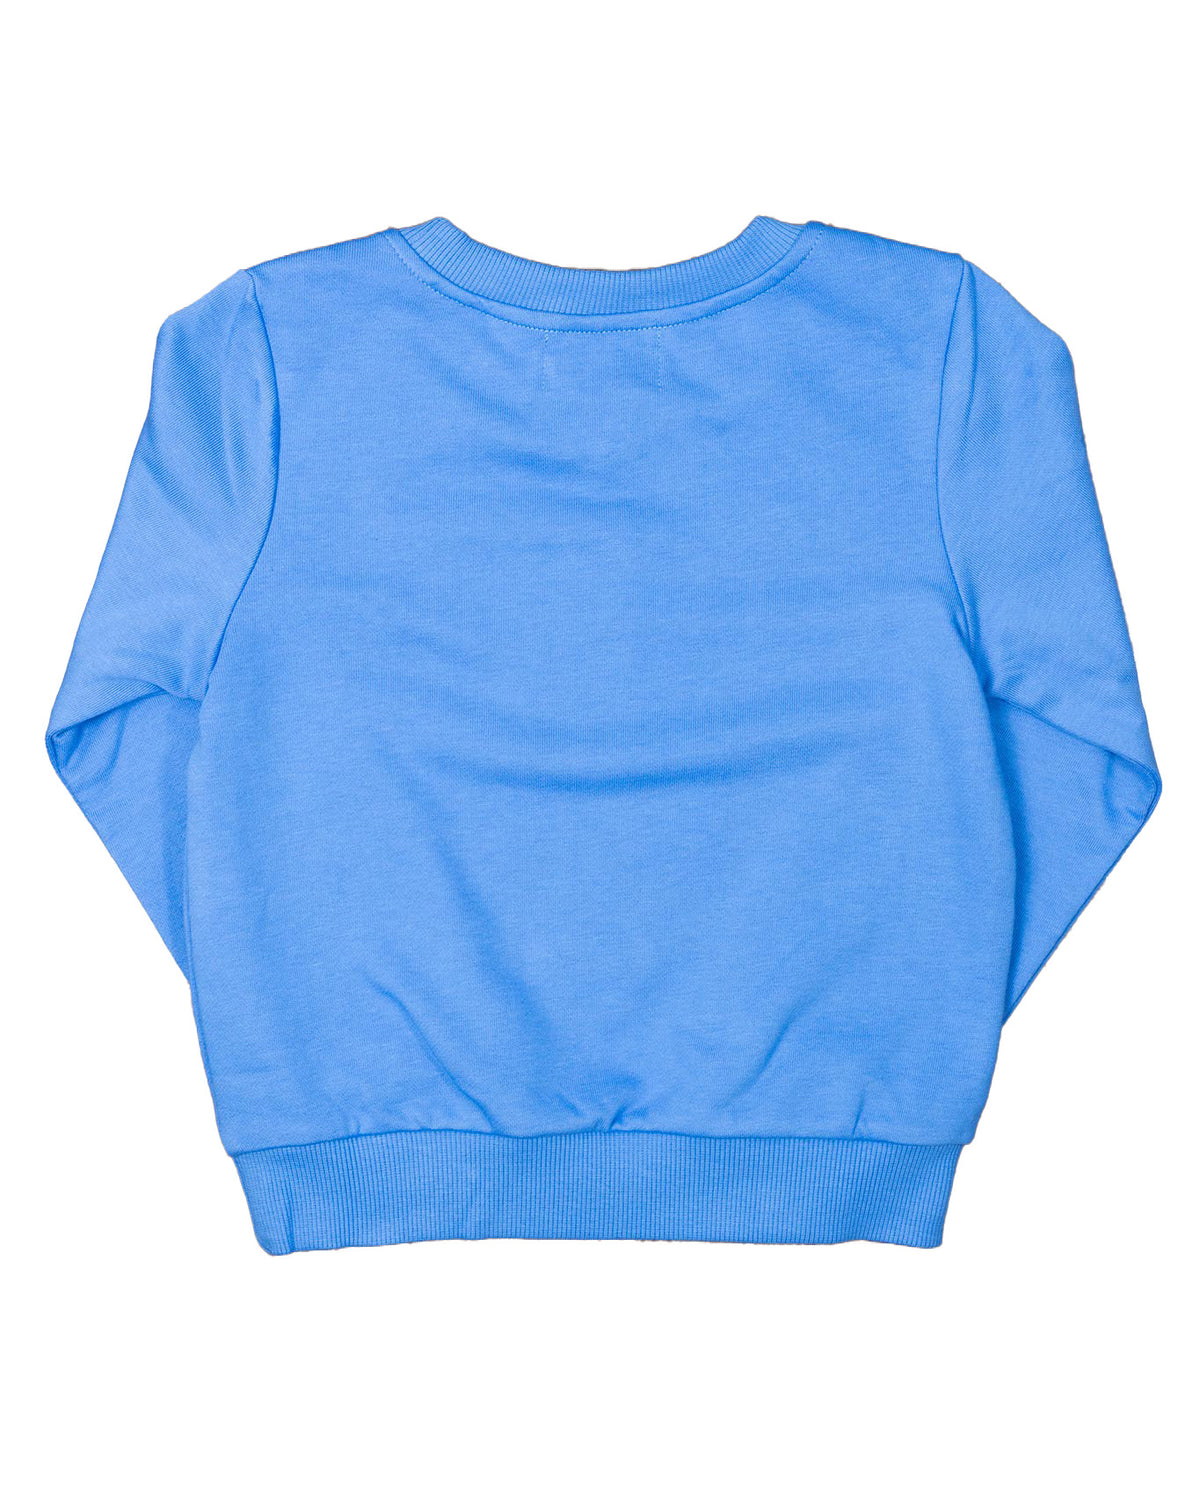 Crewneck Unisex Sweatshirt in Cloud Blue- FINAL SALE